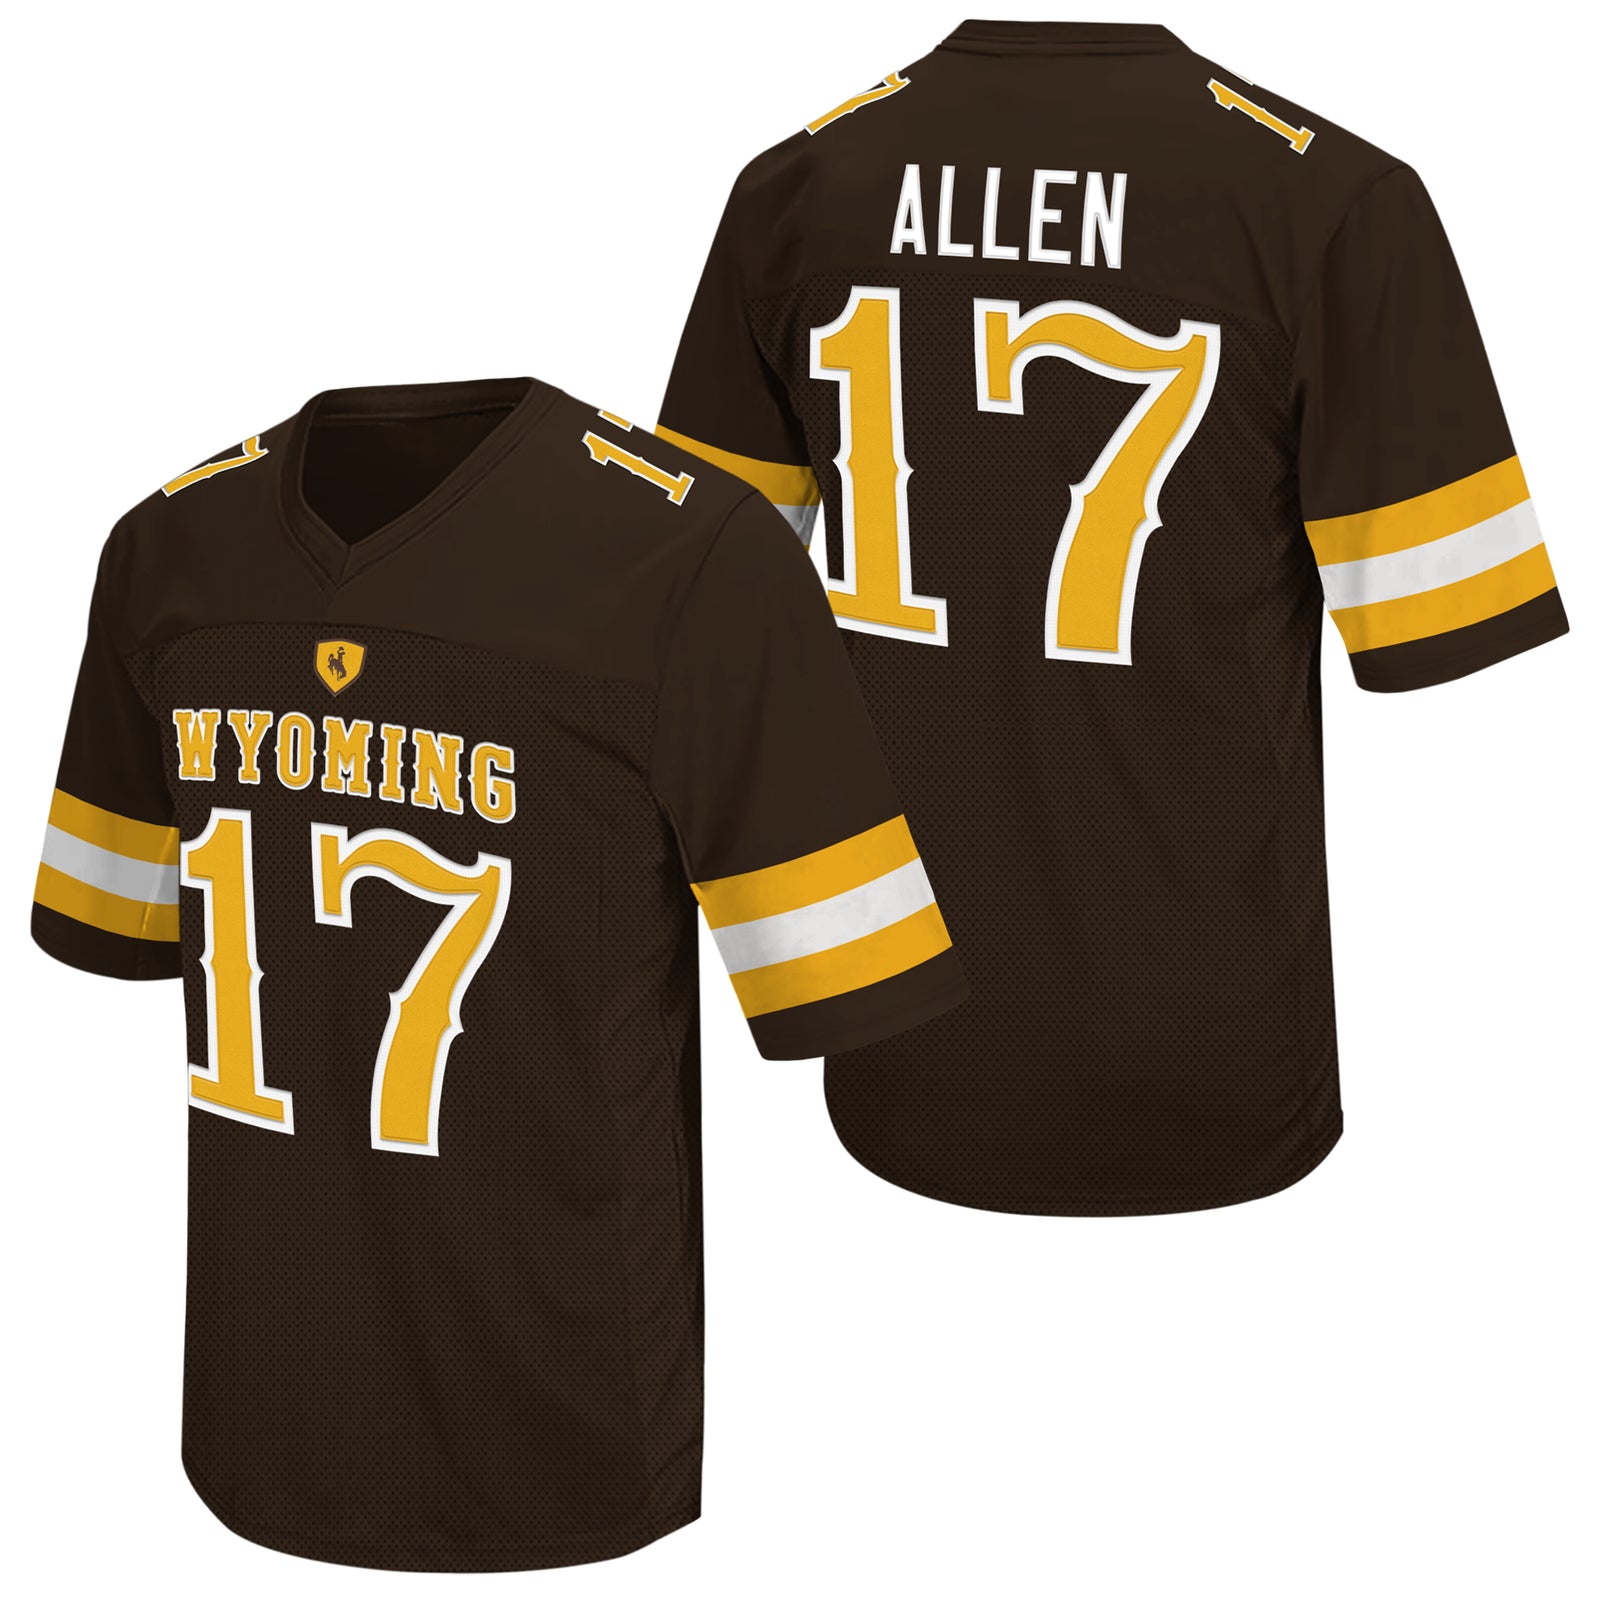 Wyoming Cowboys Josh Allen #17 Jersey - Gold